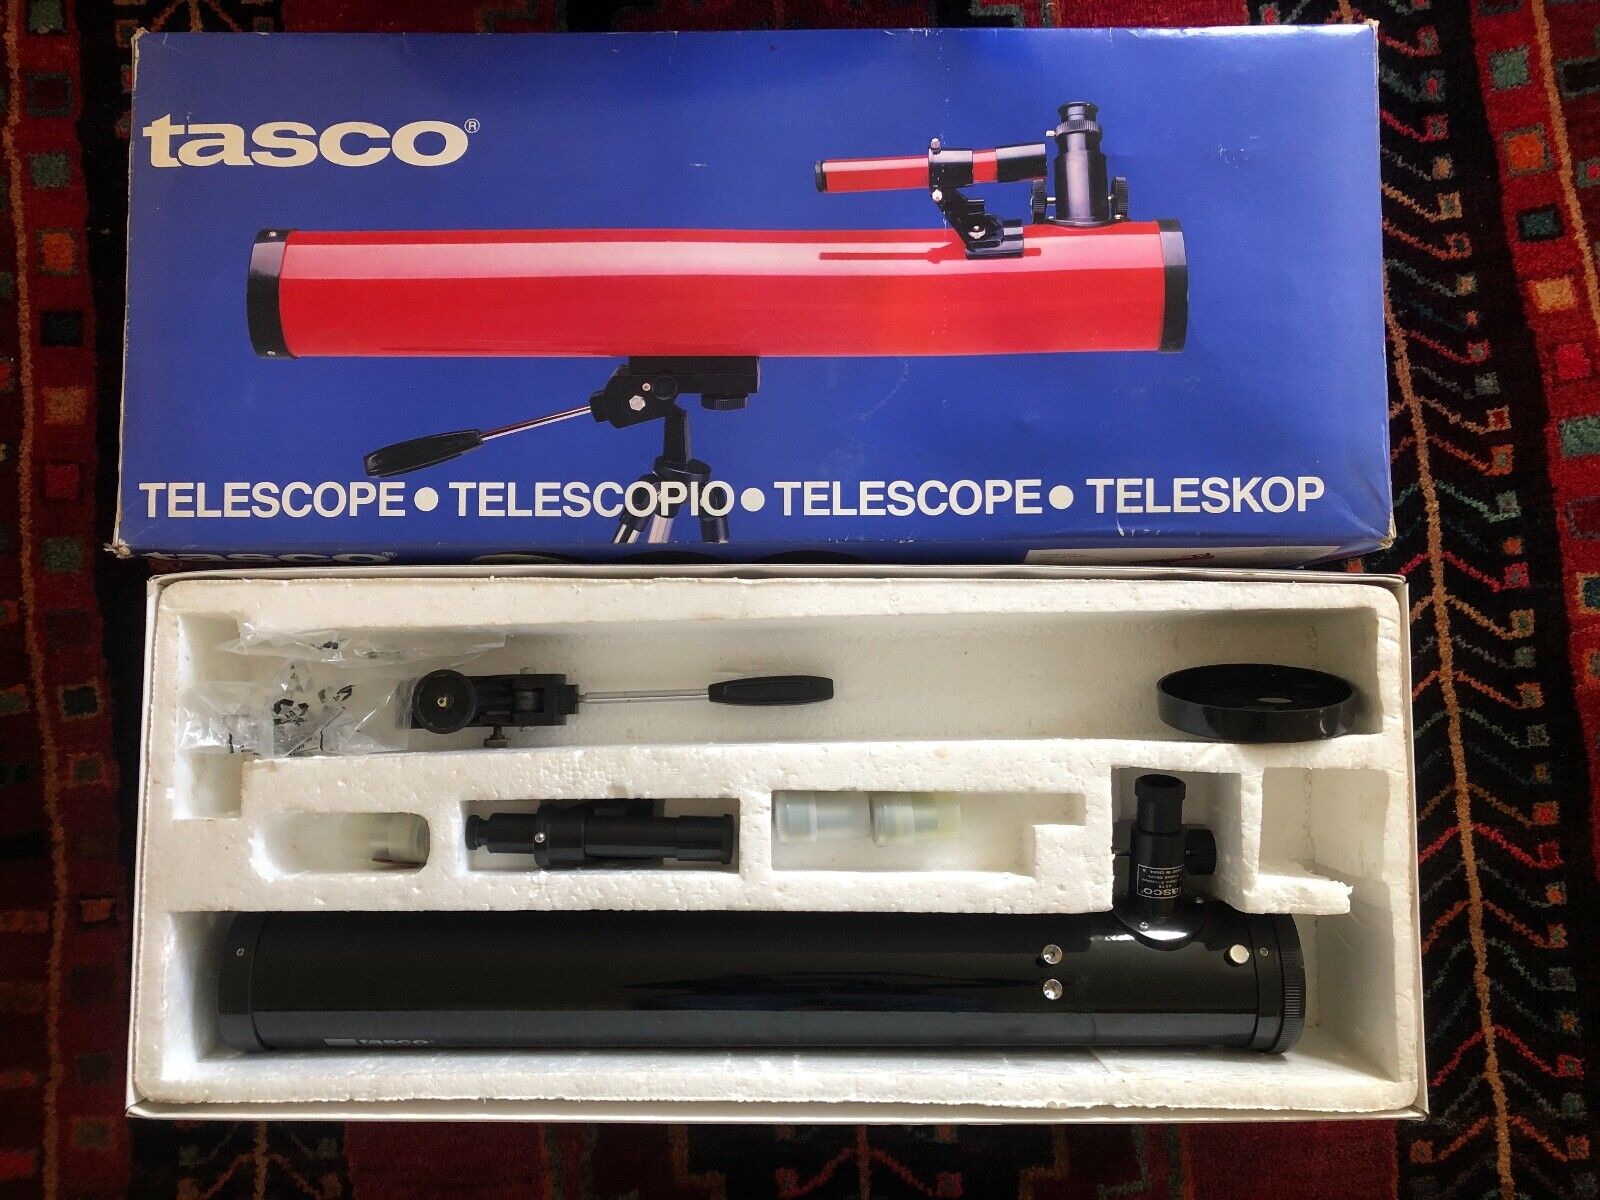 SALE Tasco Telescope 234x72mm In Original Box includes Map \